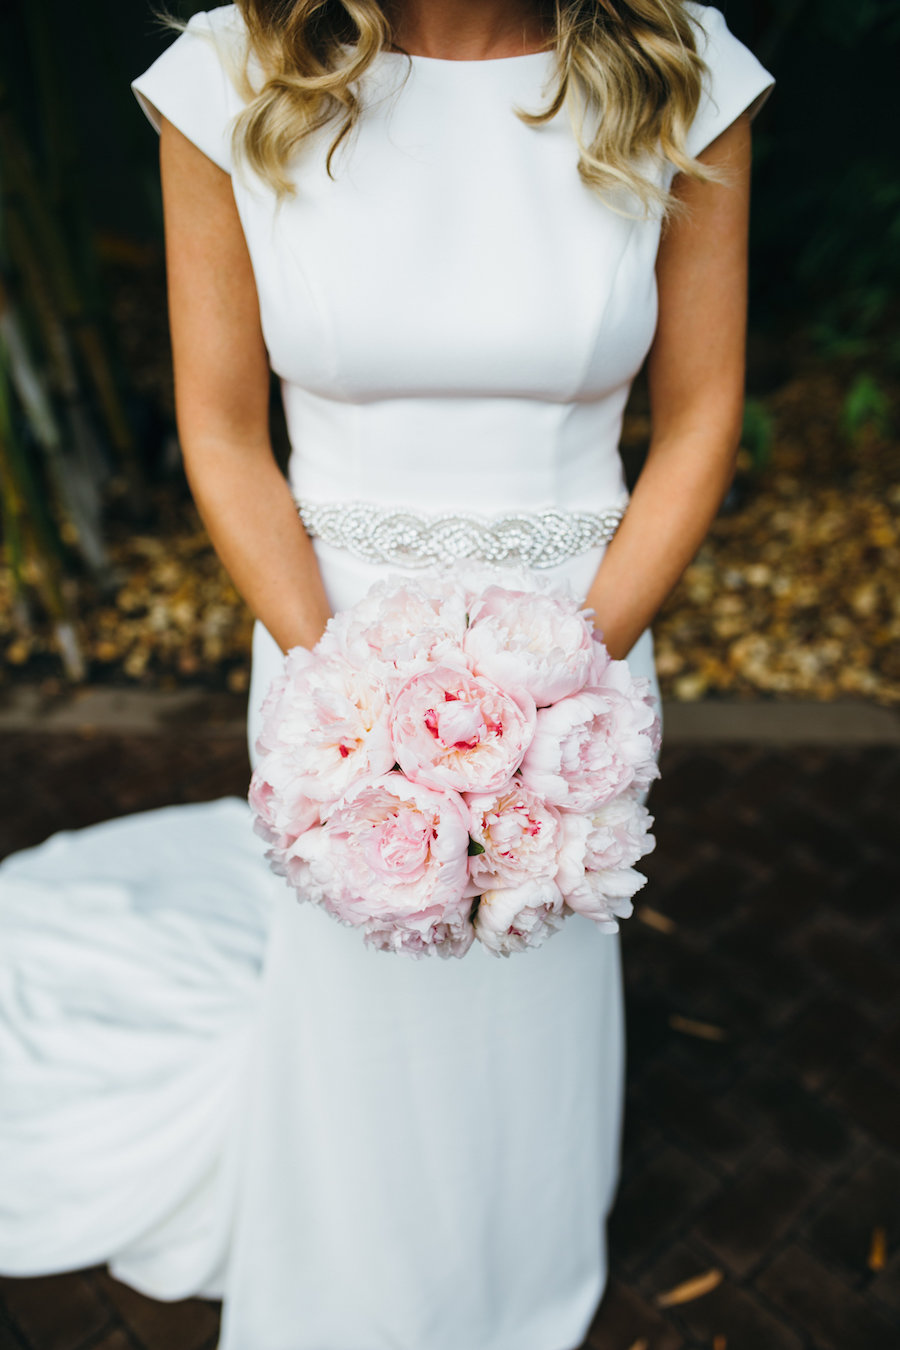 Bridal Wedding Portrait in Ivory, Cap Sleeve Sheath Mikaella Wedding Dress with Rhinestone Belt and Blush Pink Peony Wedding Bouquet